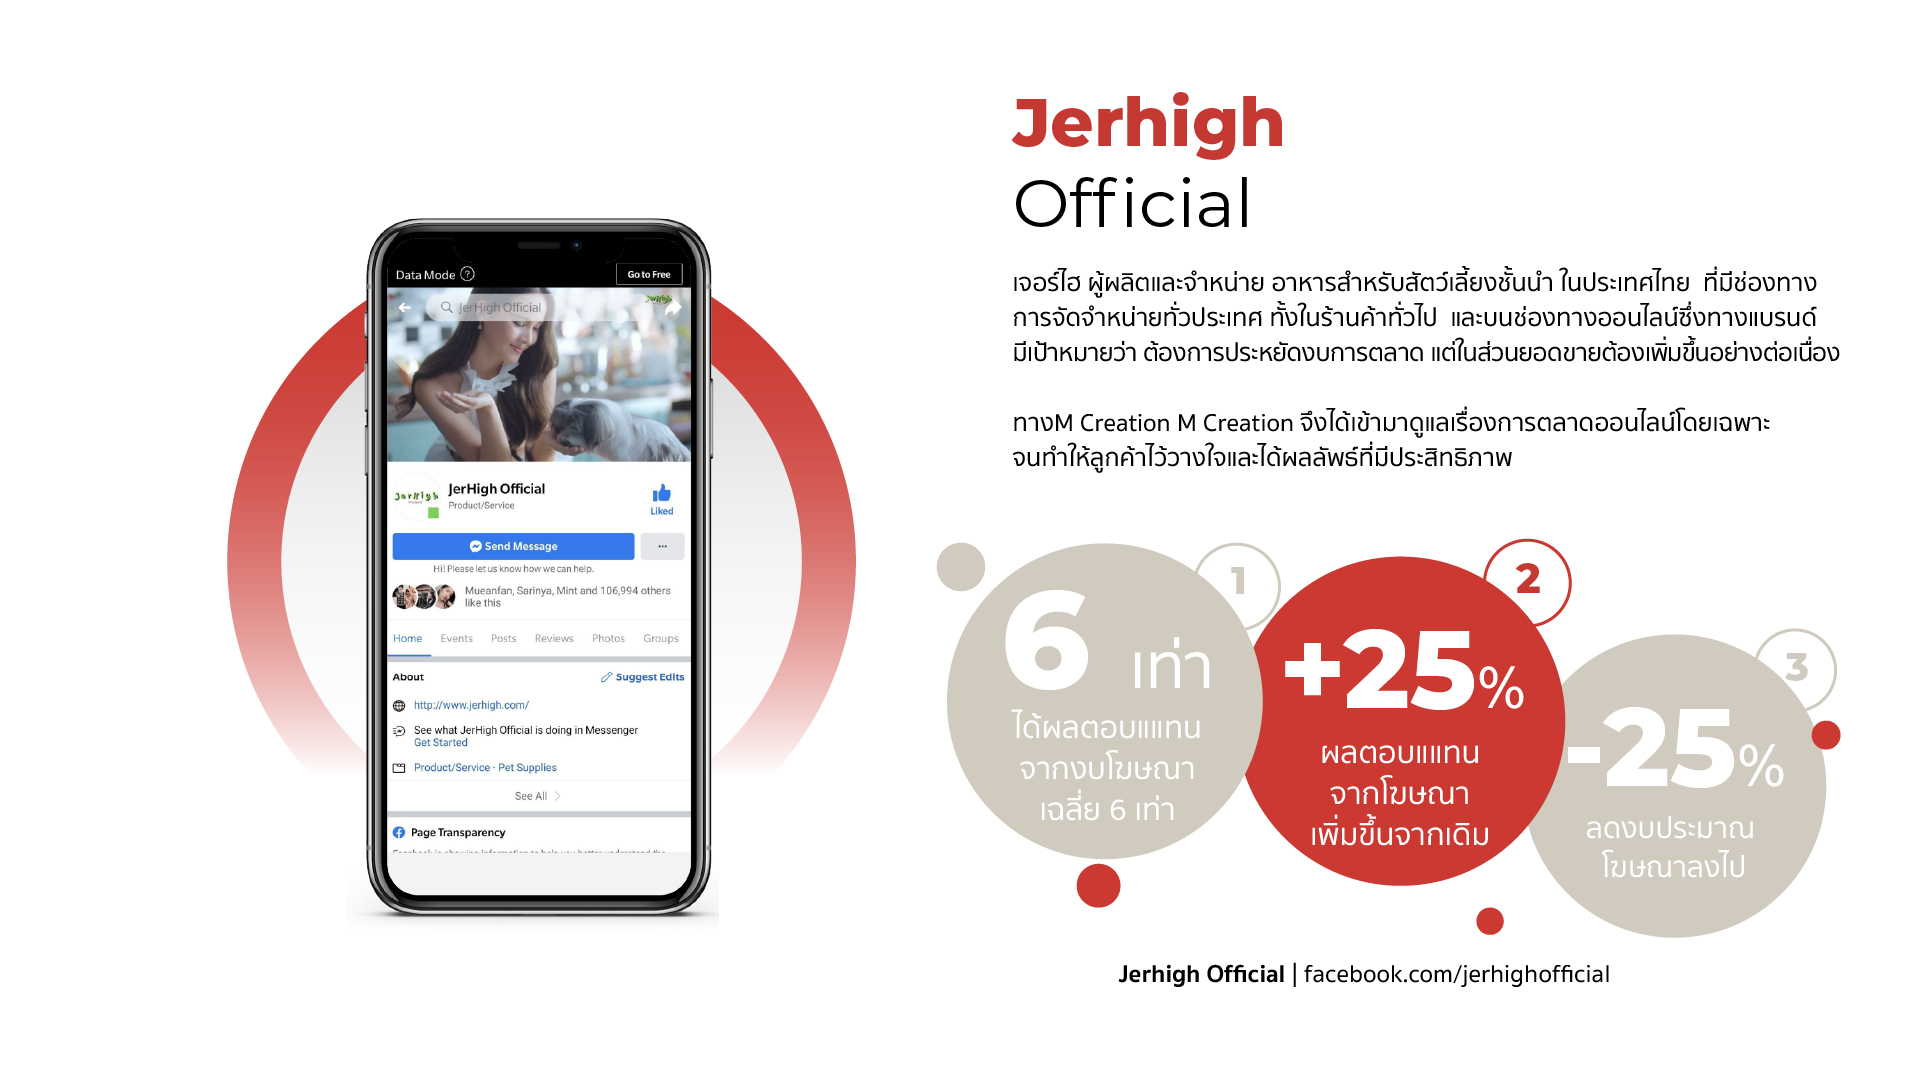 Jerhigh official